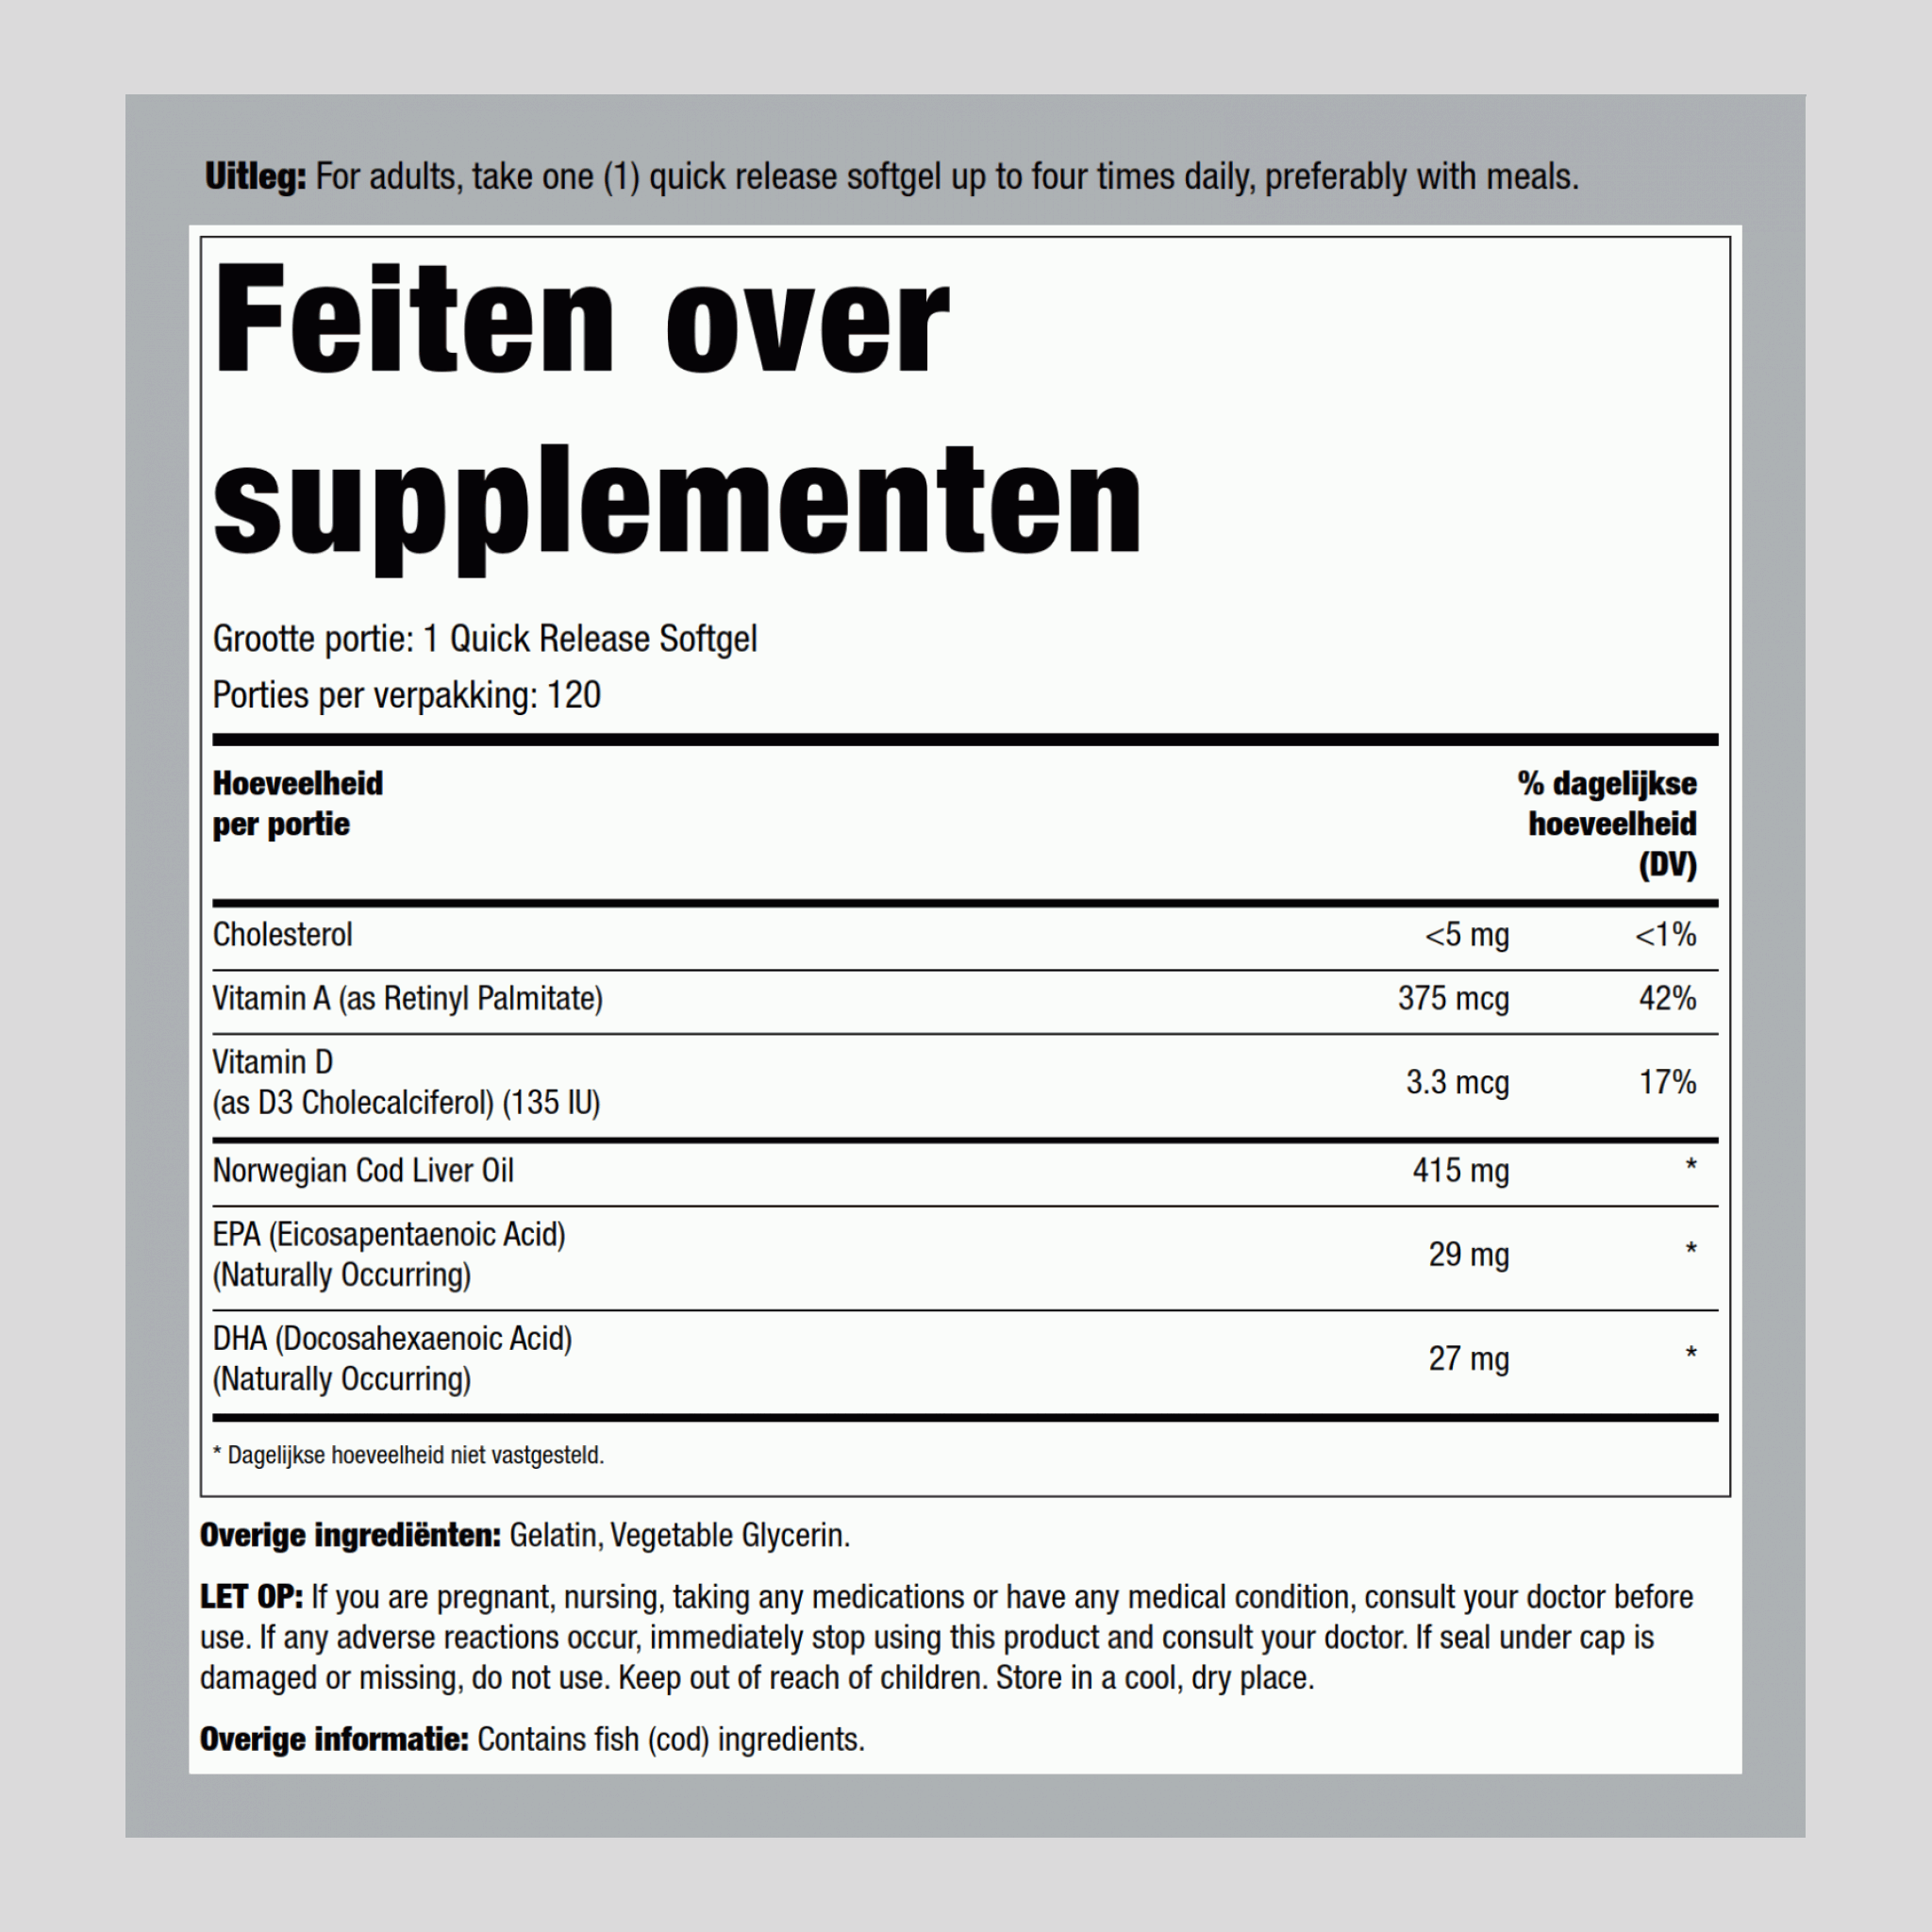 Levertraan  (Norwegian) 415 mg 120 Snel afgevende softgels     